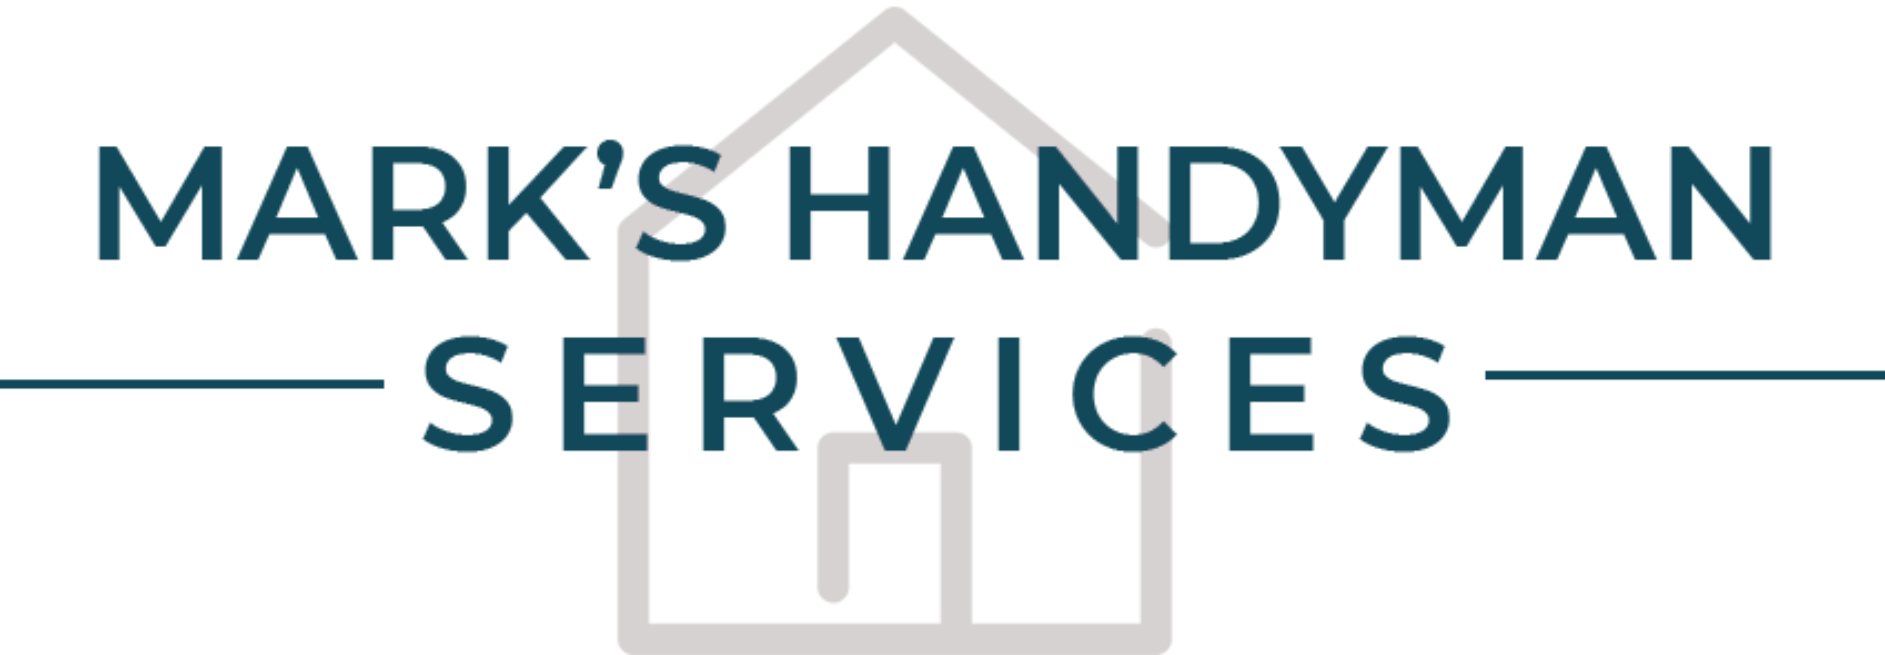 Mark's Handyman Services Logo